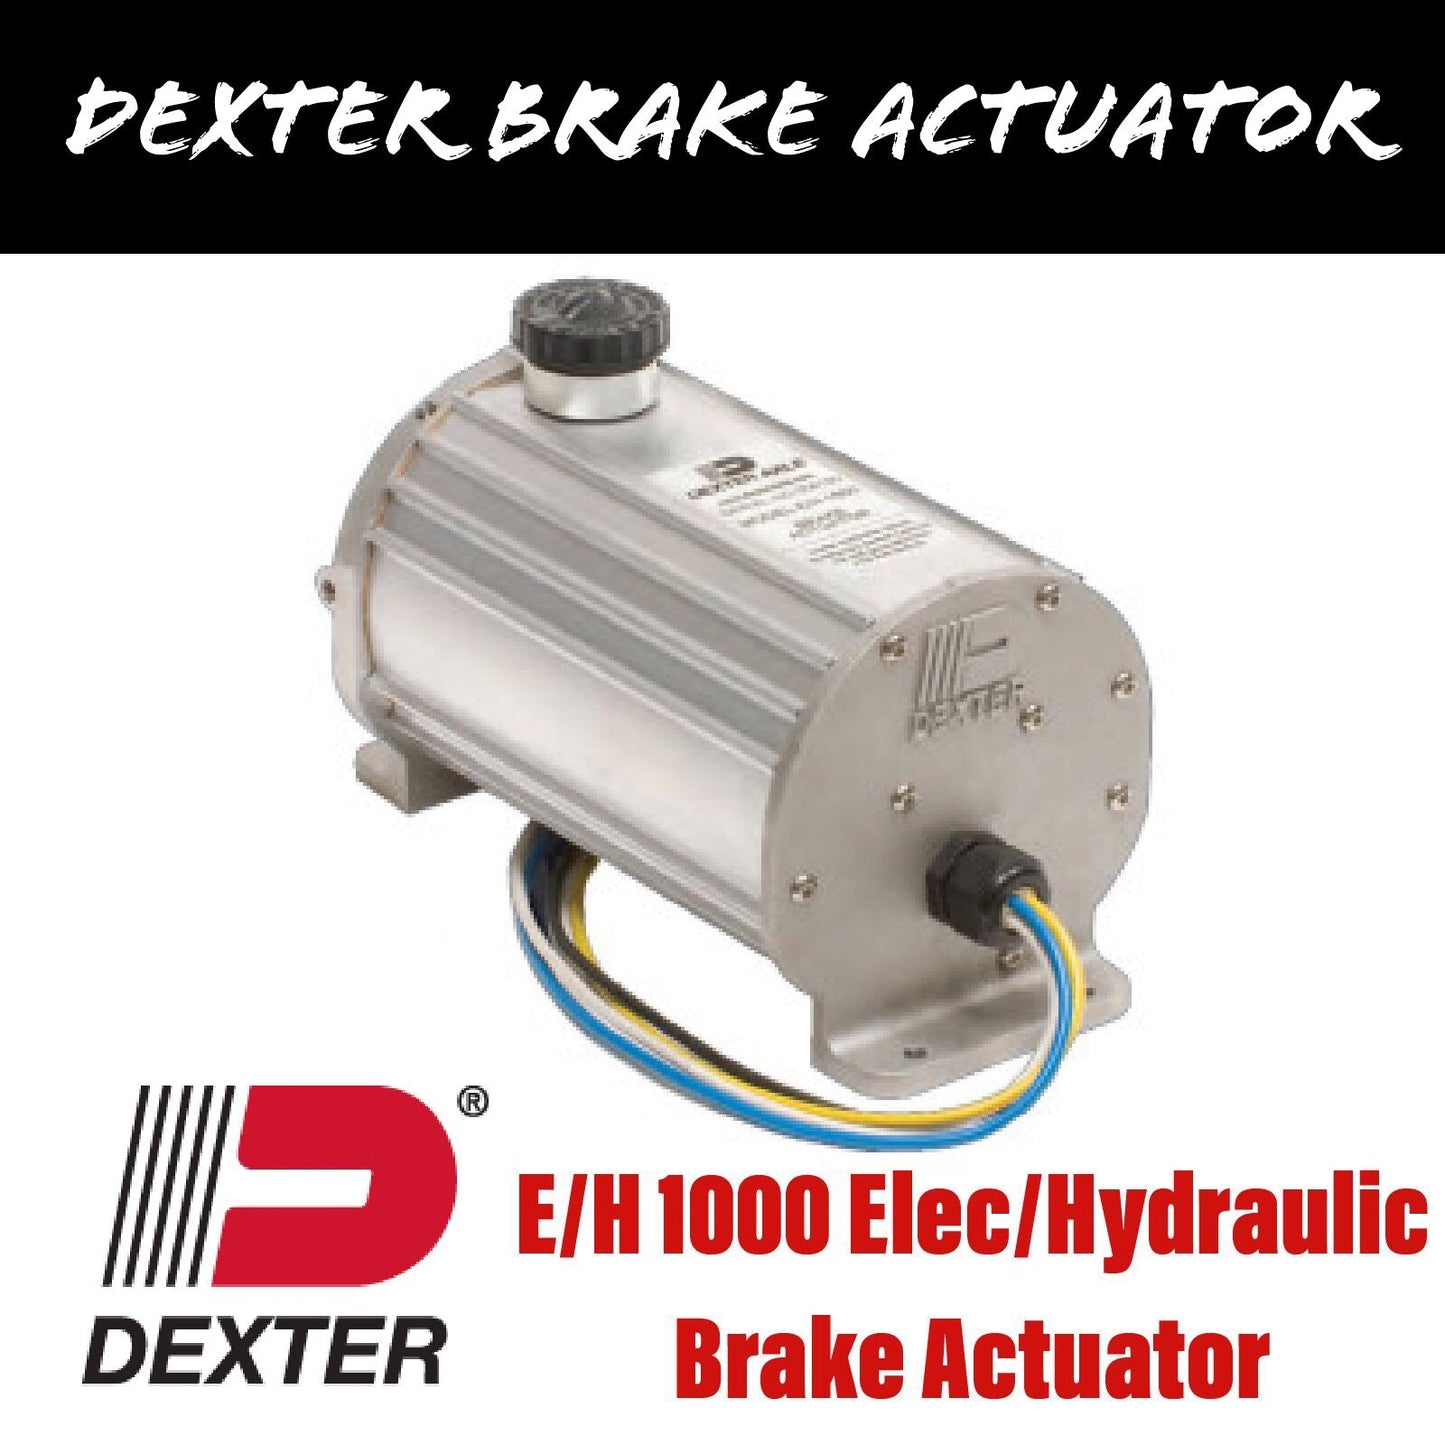 DEXTER E/H 1000 Electric/Hydraulic Brake Actuator